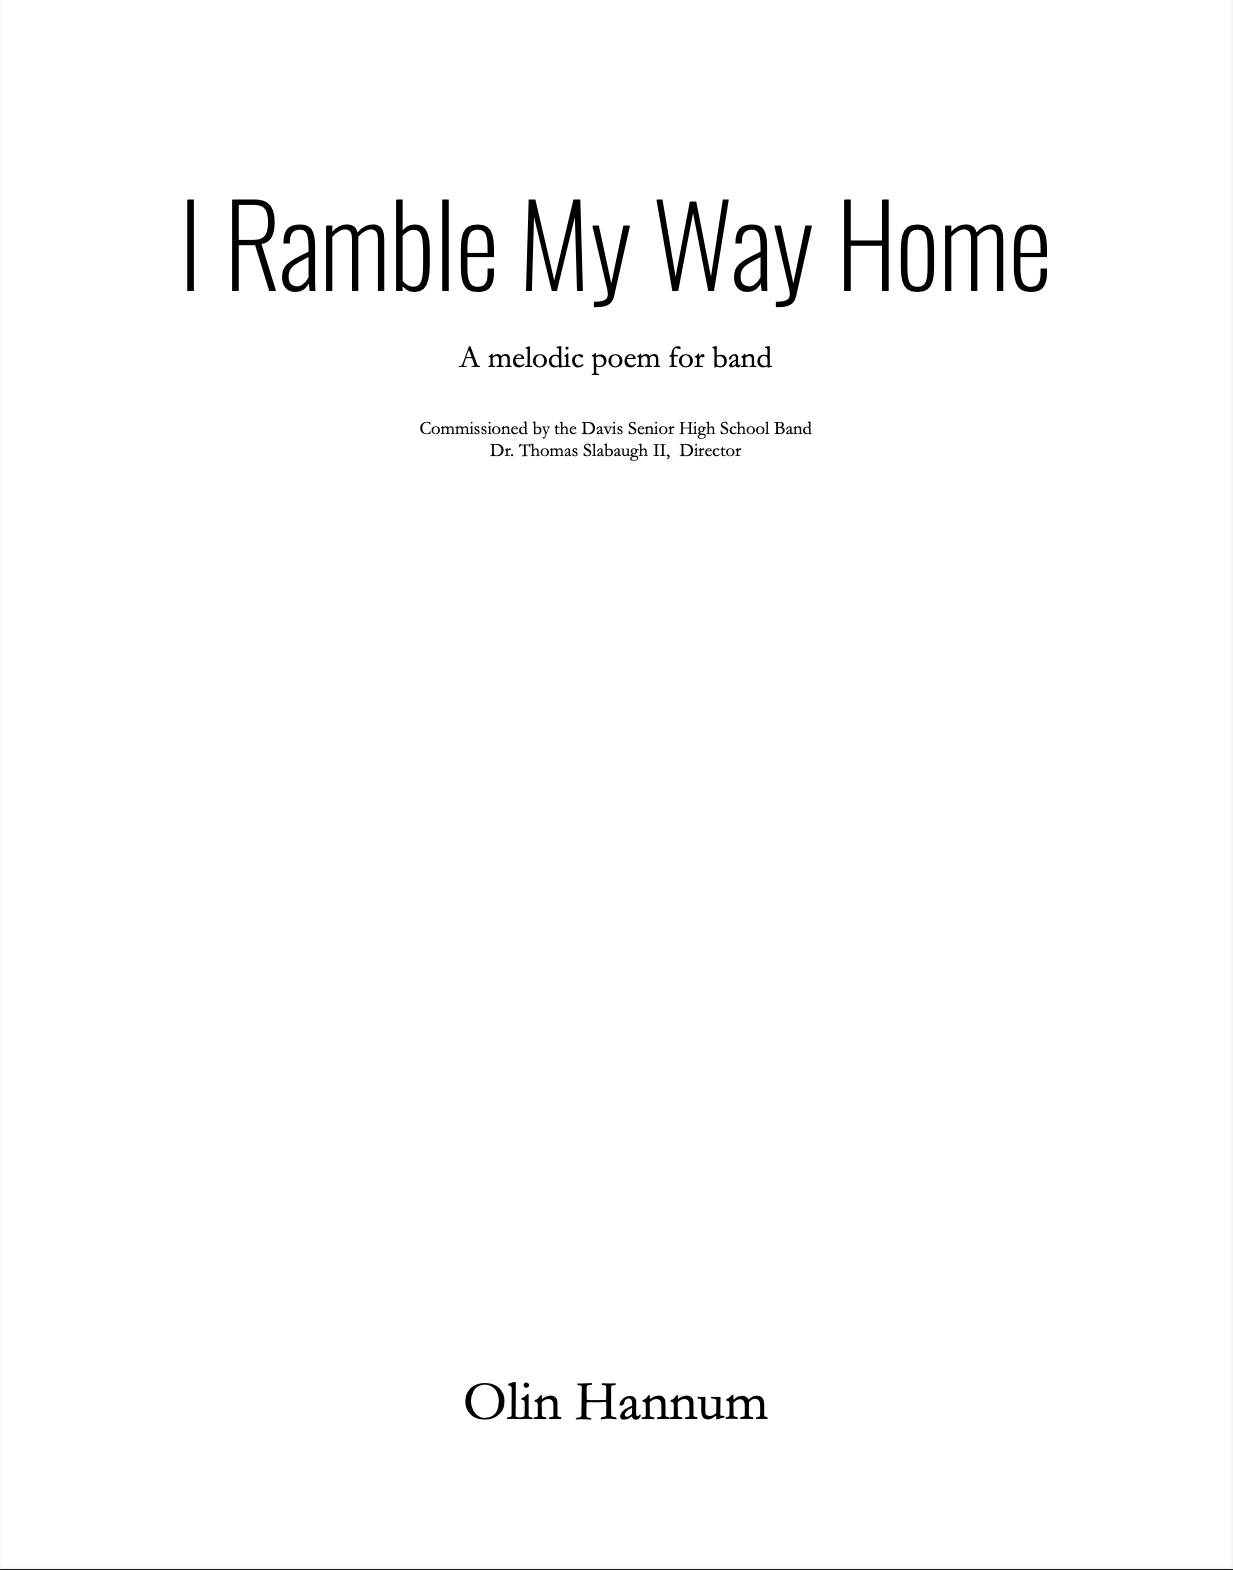 I Ramble My Way Home by Olin Hannum